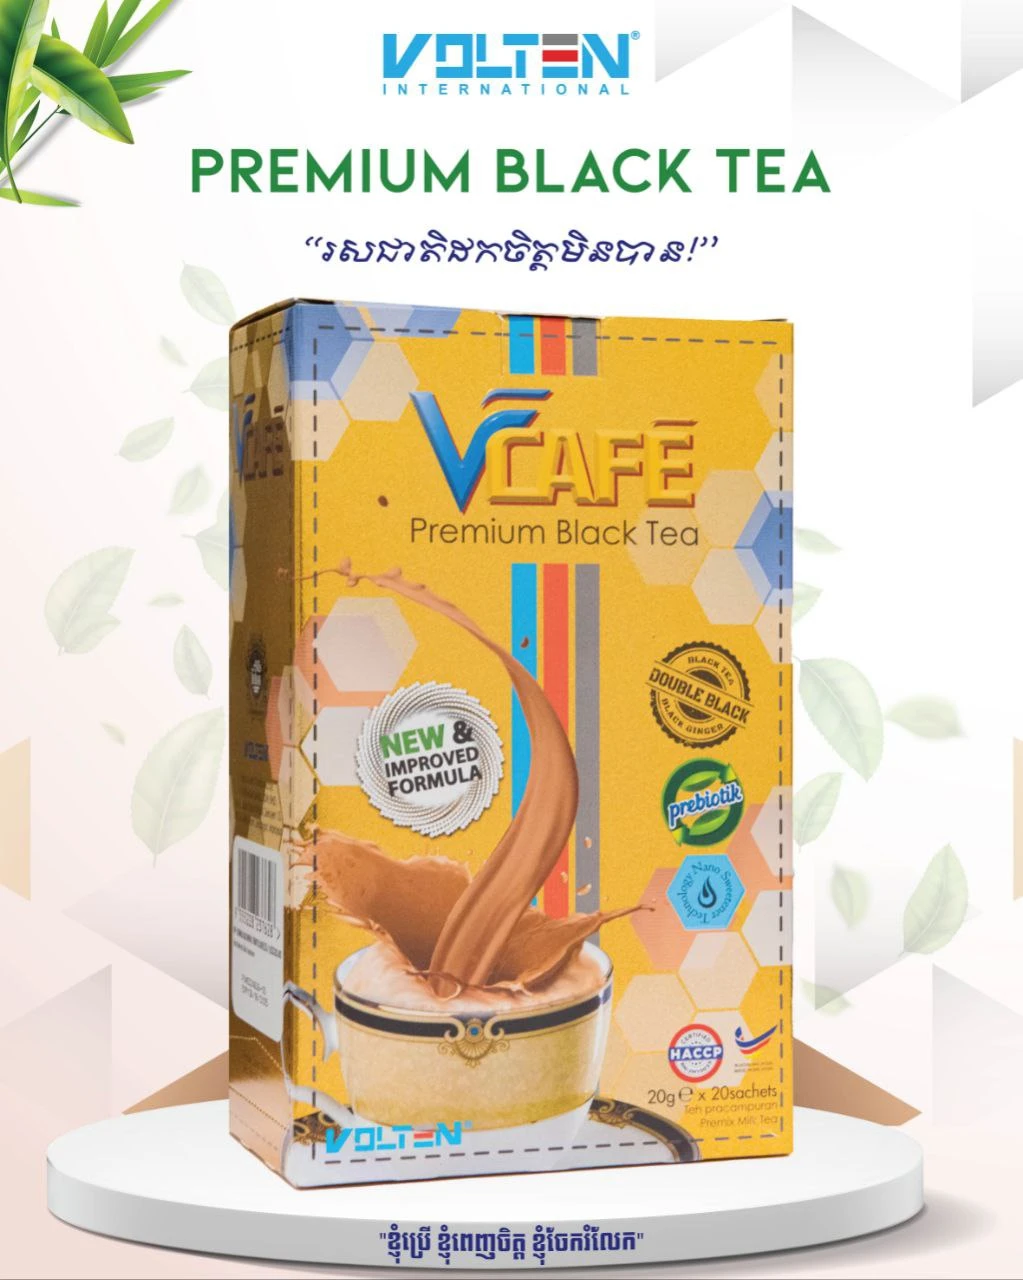 VOLTEN VCAFE (Premium Black Tea) 20G/20SACHETS